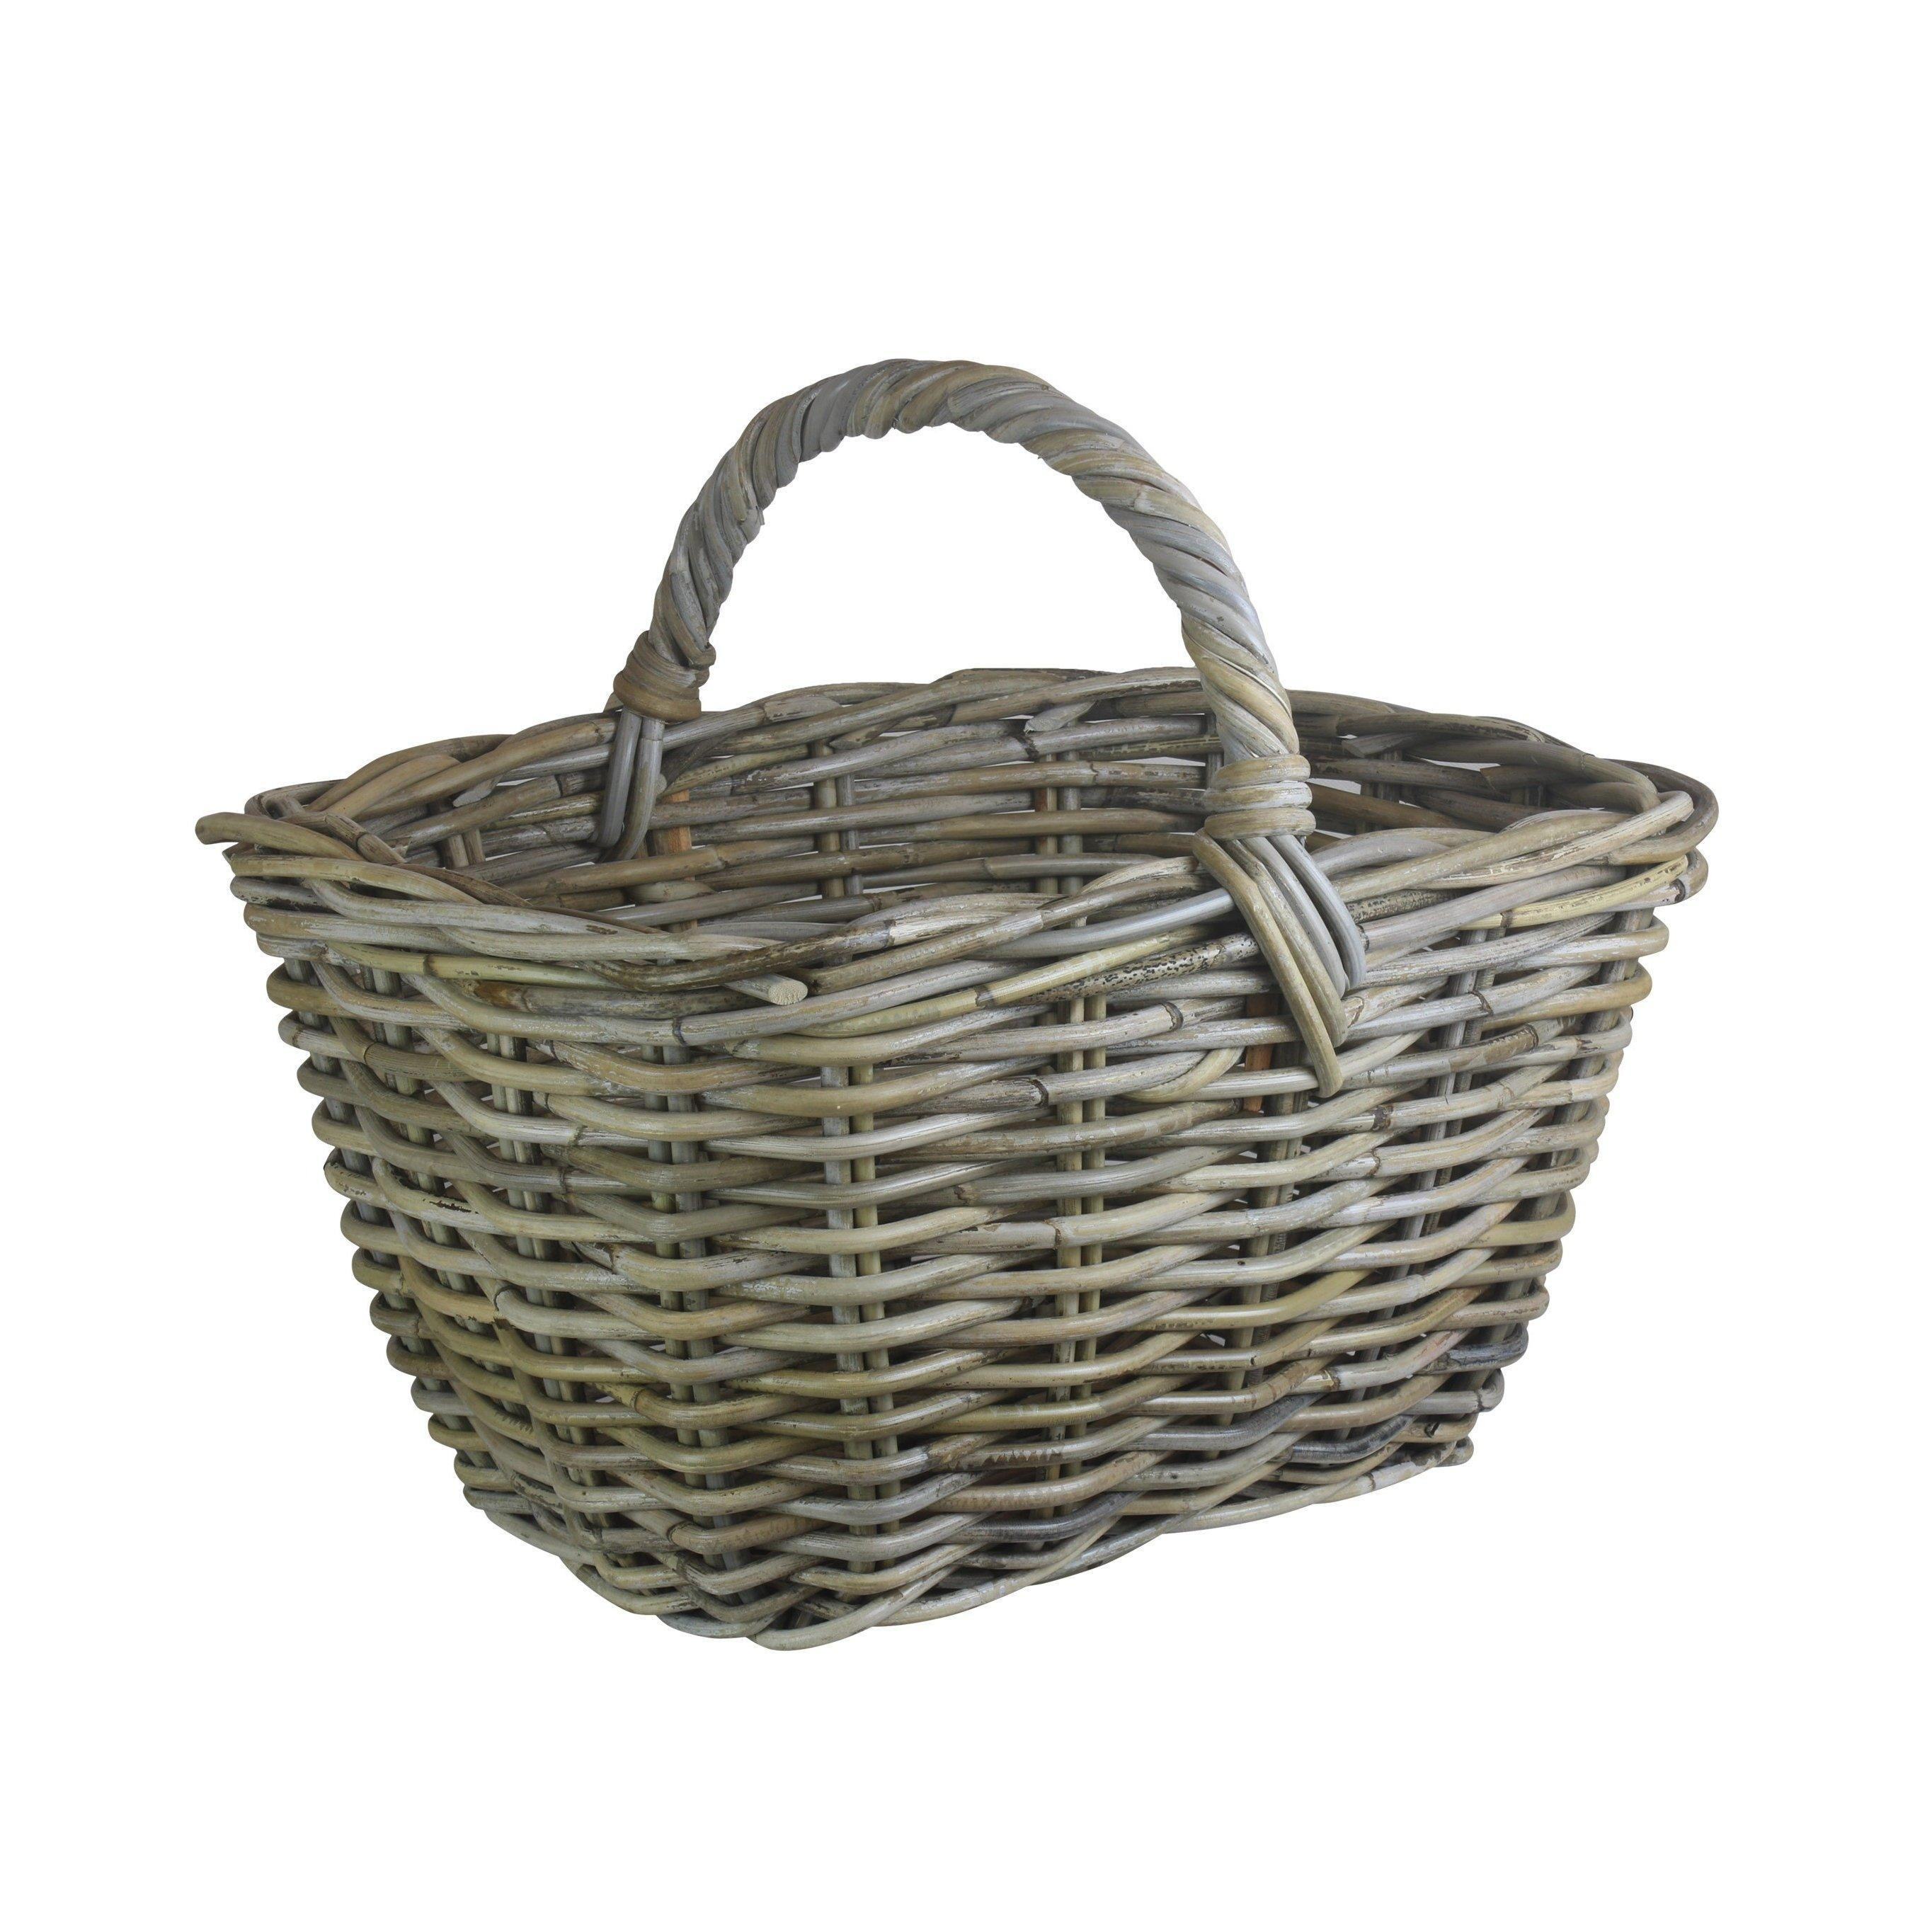 Rattan Grey Rattan Kindling Basket - image 1